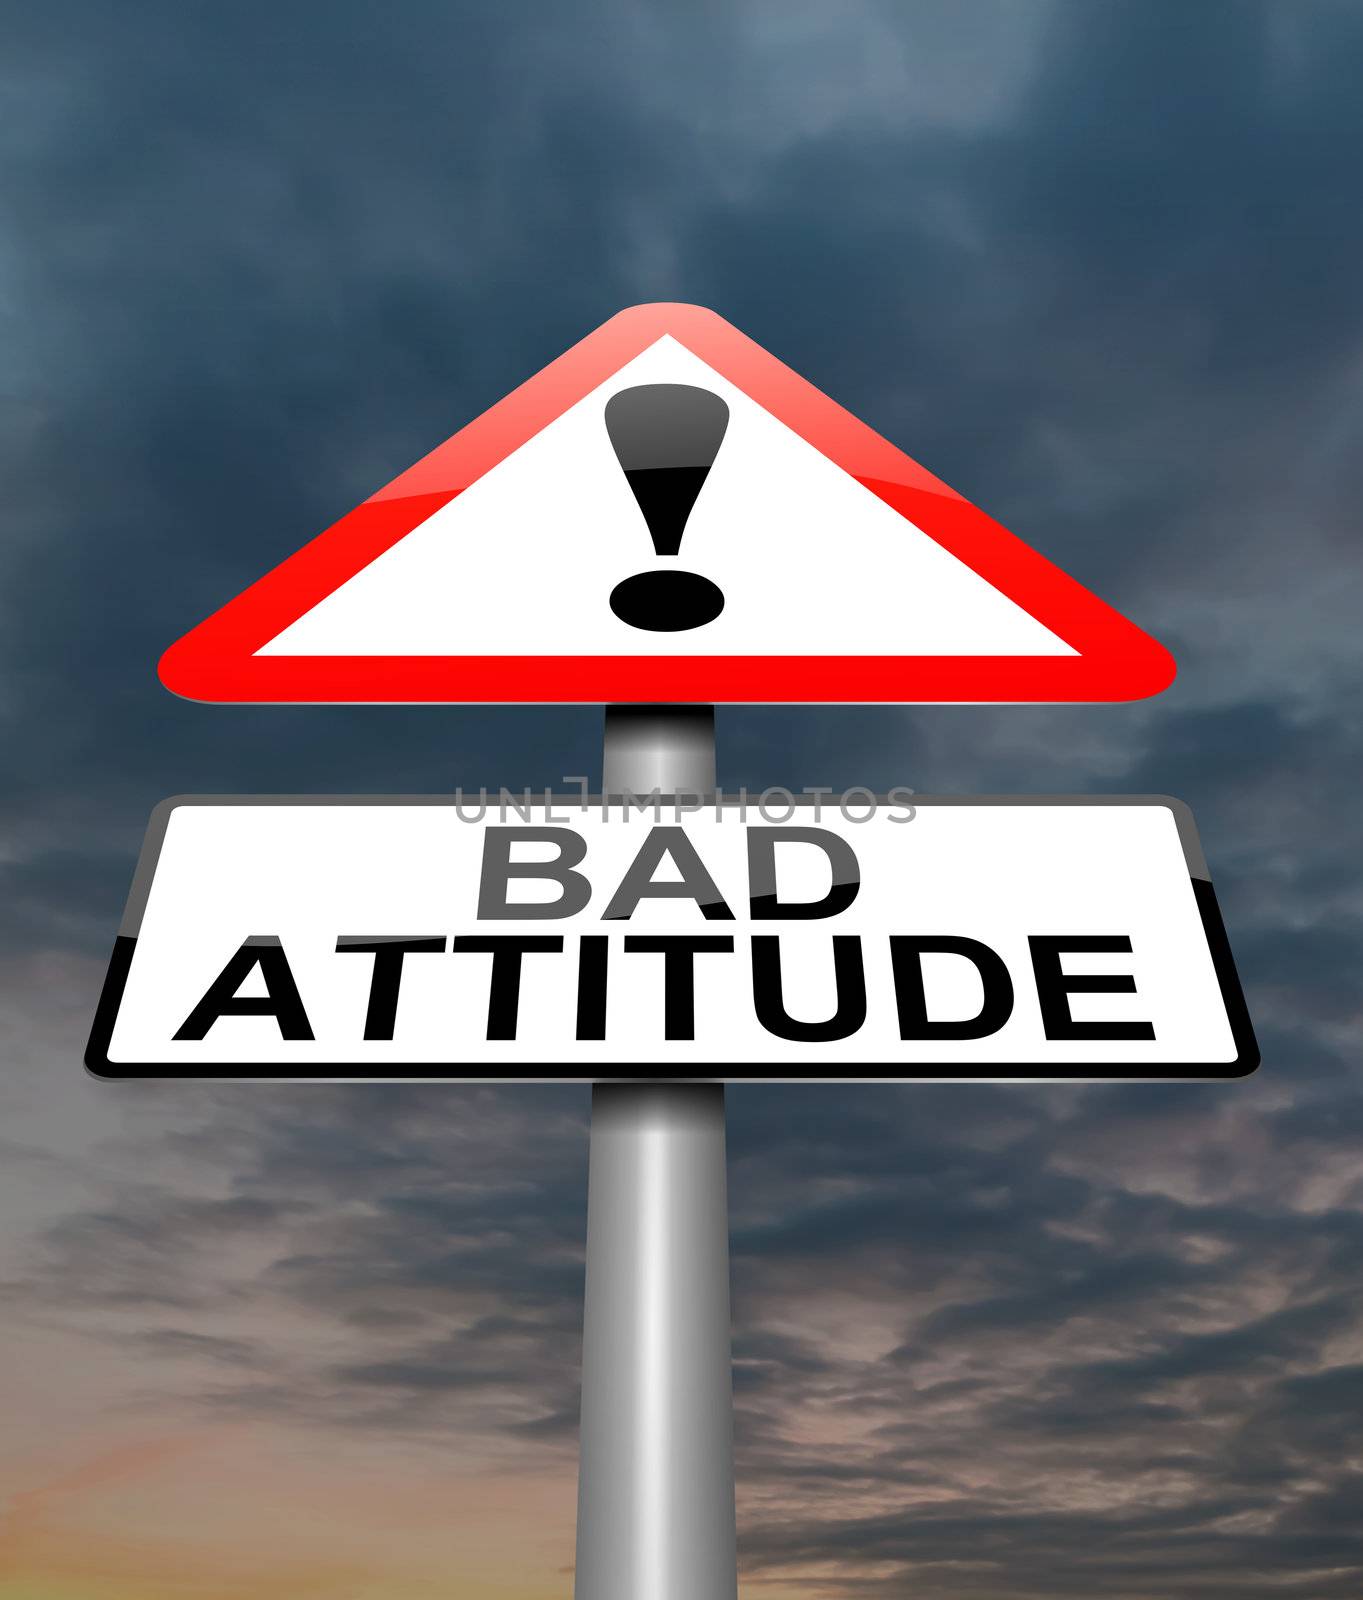 Bad attitude concept. by 72soul